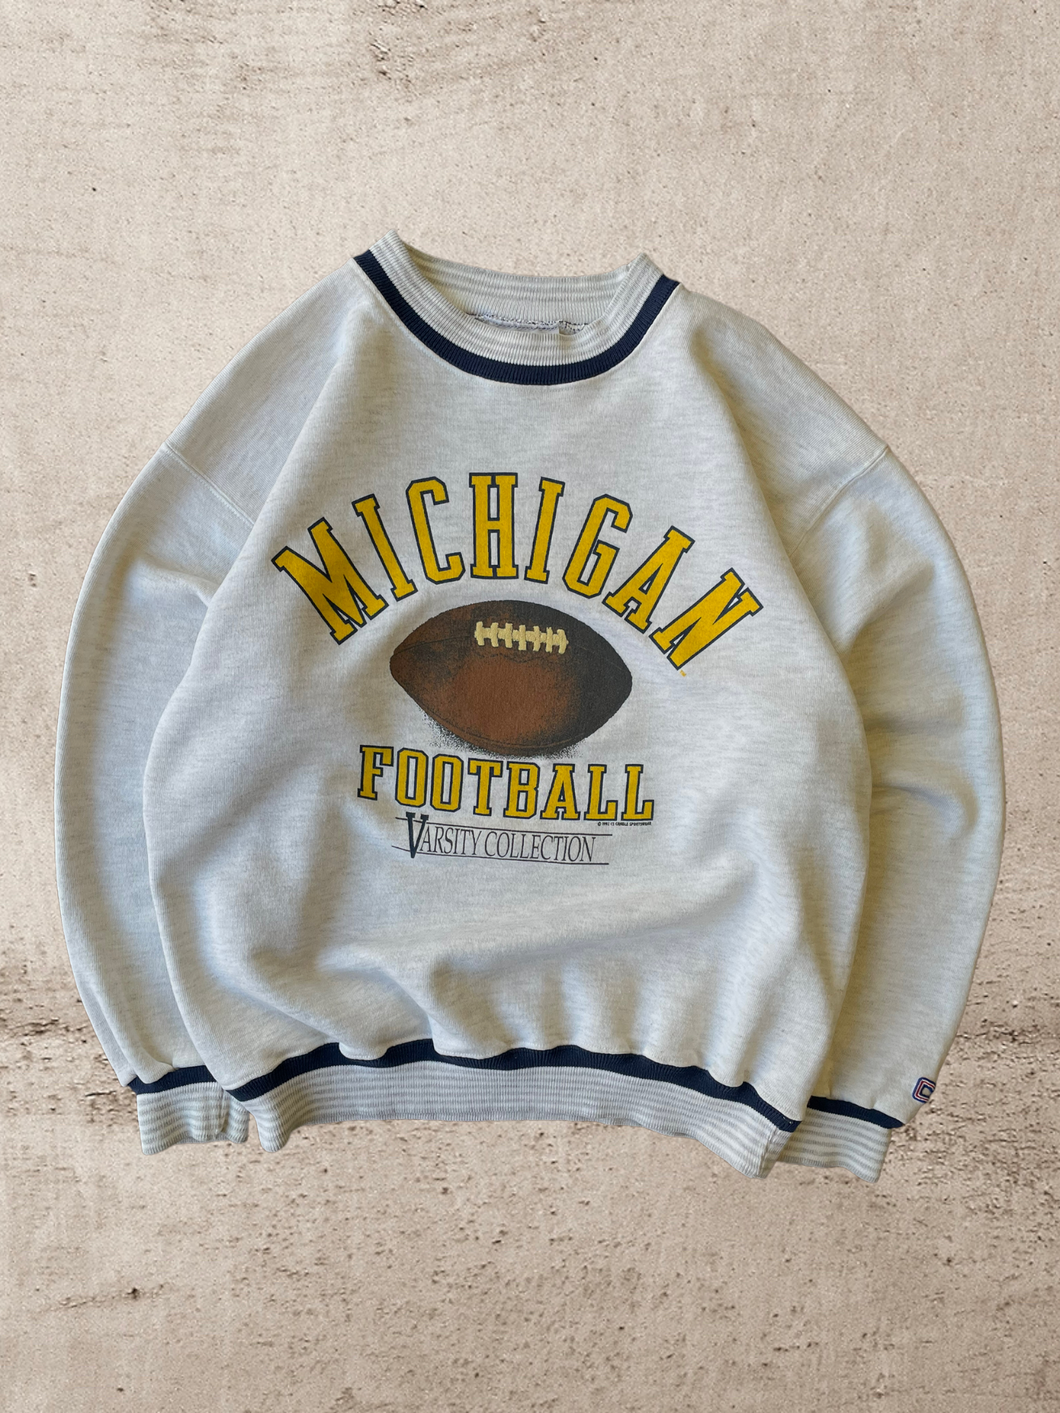 1992 Michigan Wolverines Football Crewneck - Medium